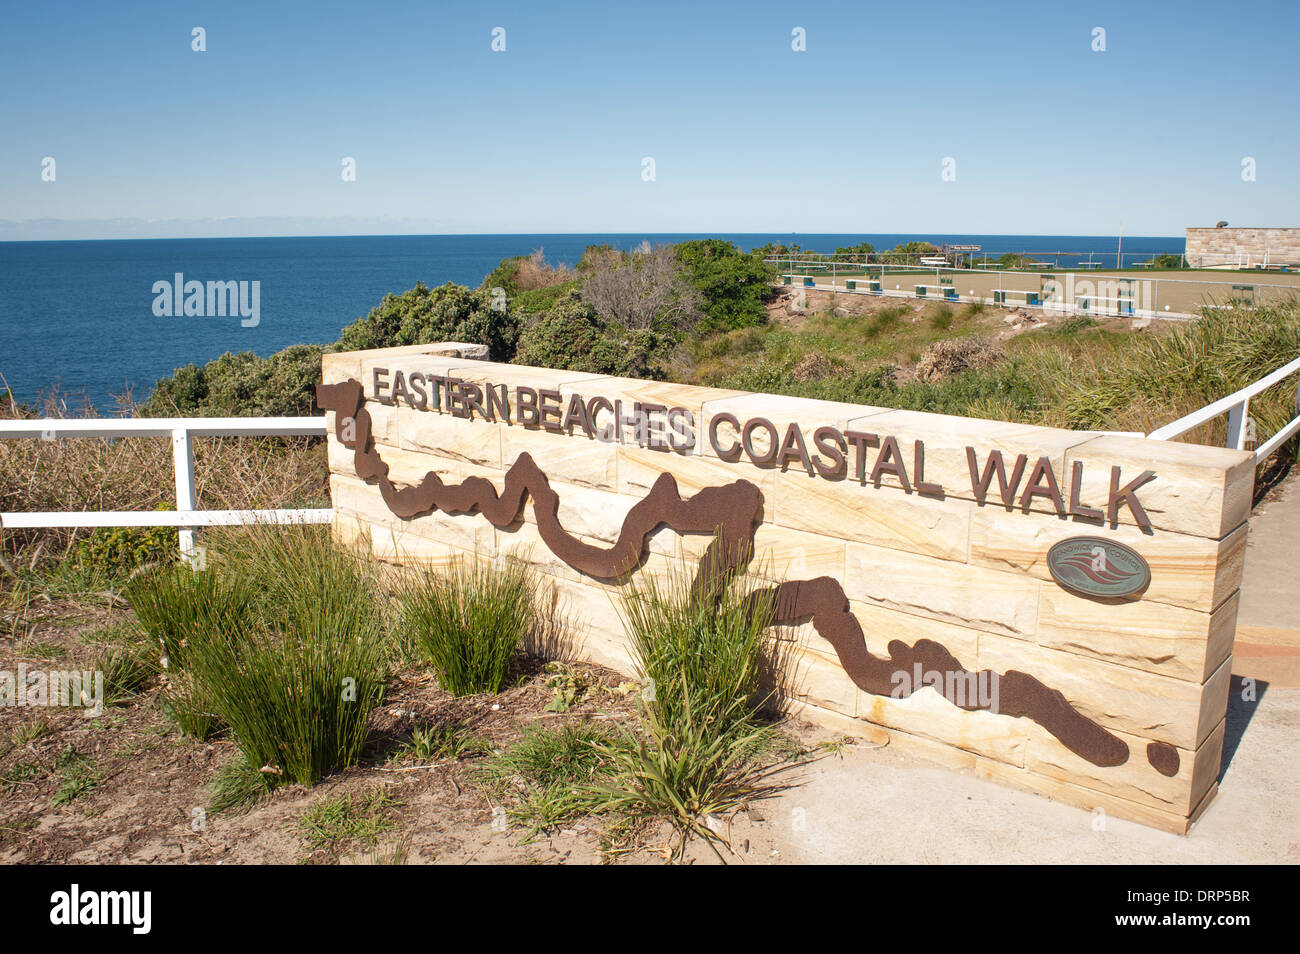 Bondi - Coogee Eastern Beaches Coastal Walk Stock Photo